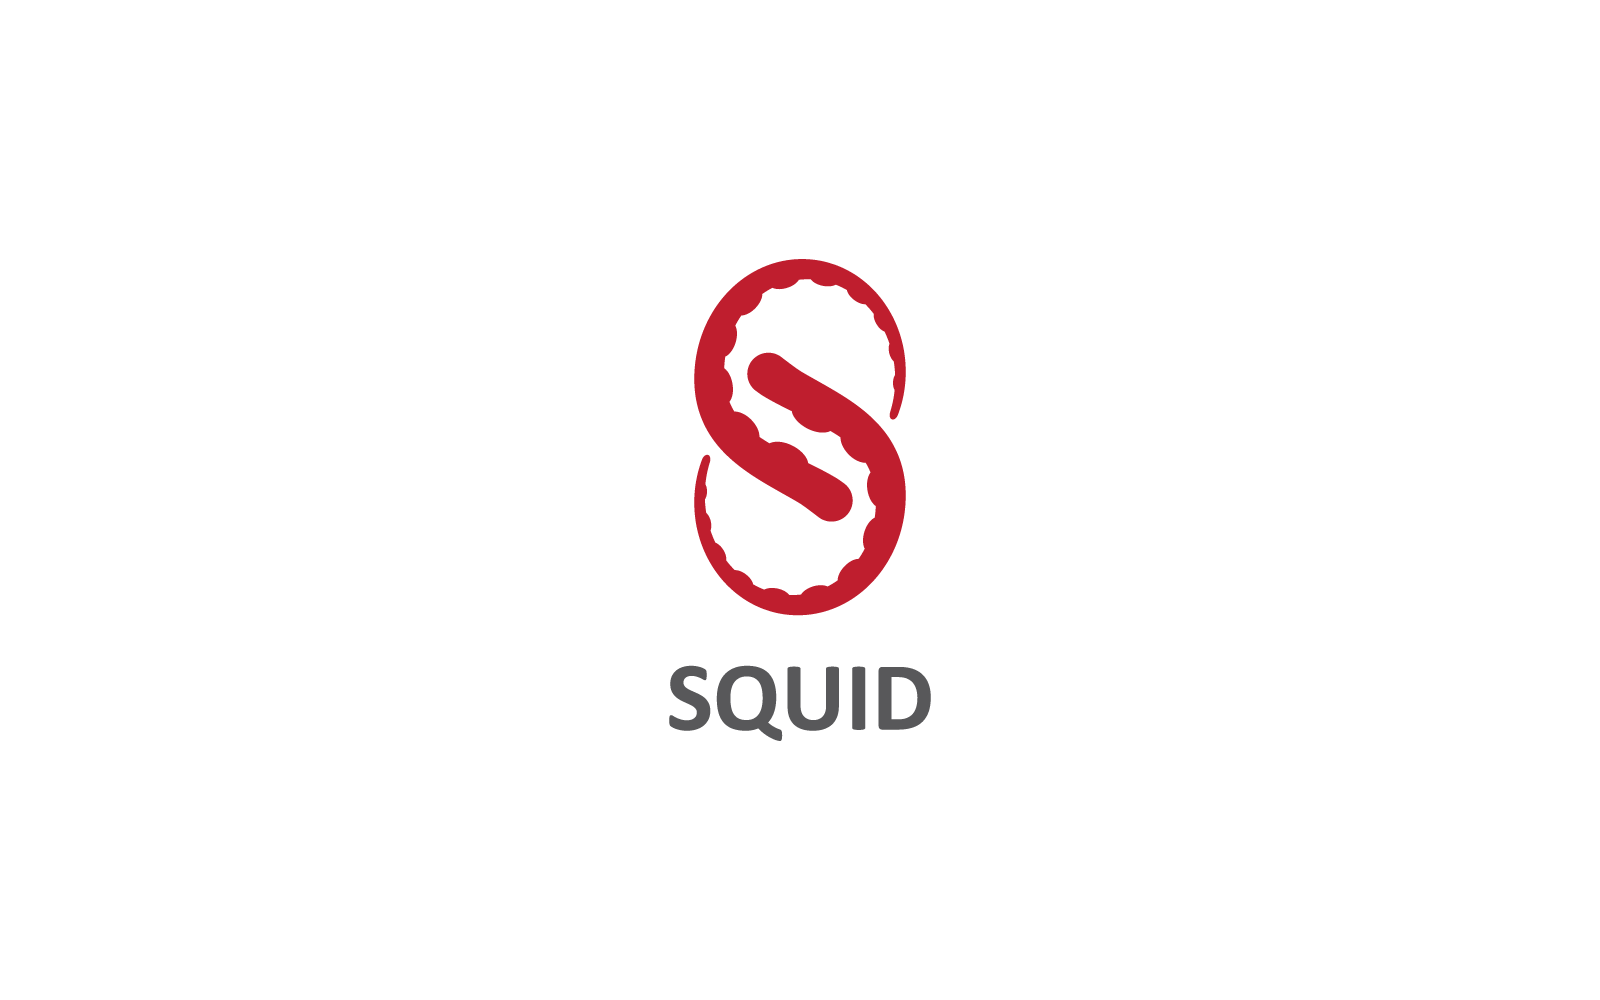 Squid fish illustration logo icon vector design